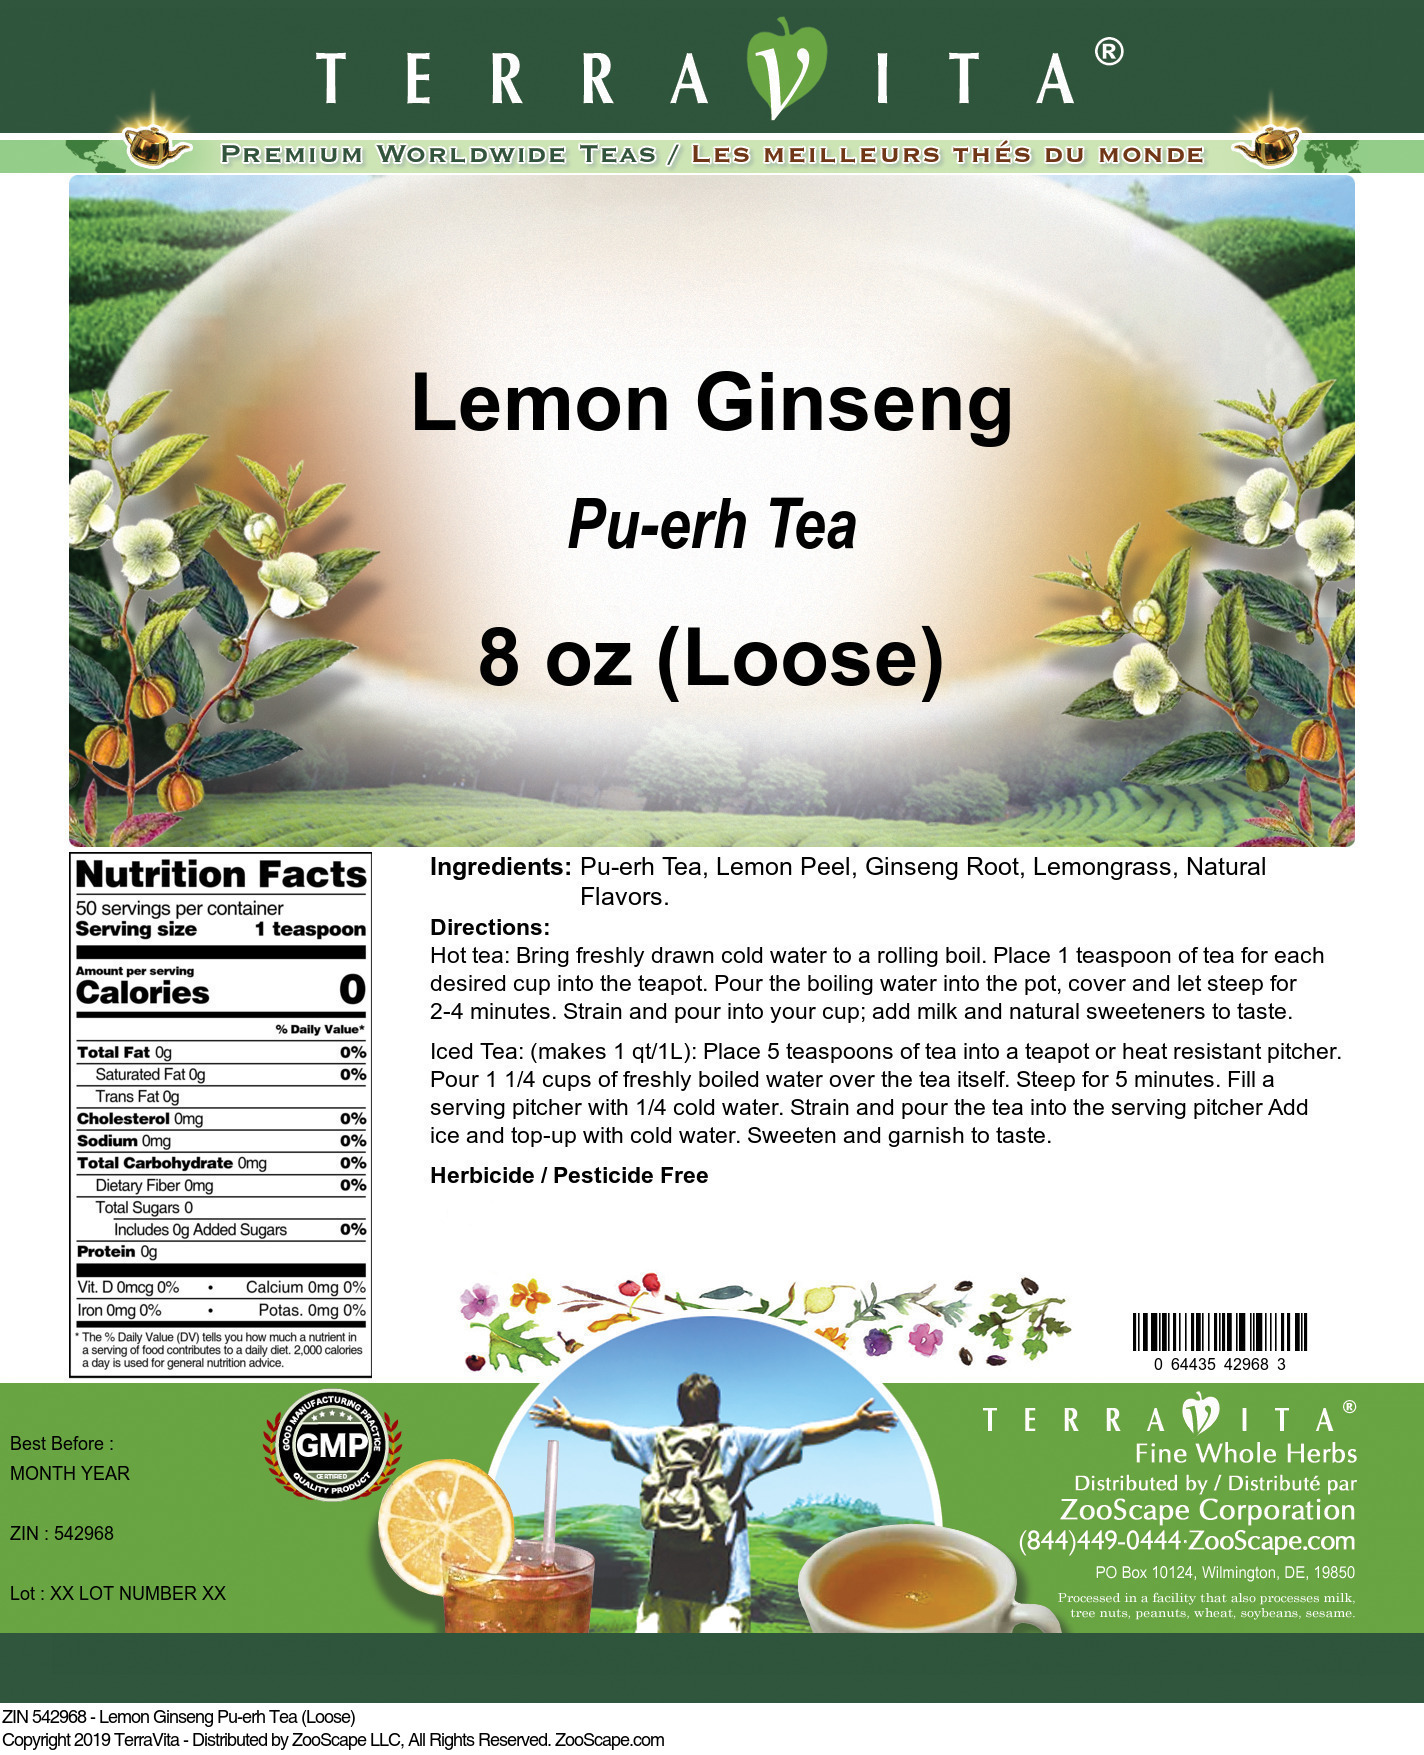 Lemon Ginseng Pu-erh Tea (Loose) - Label